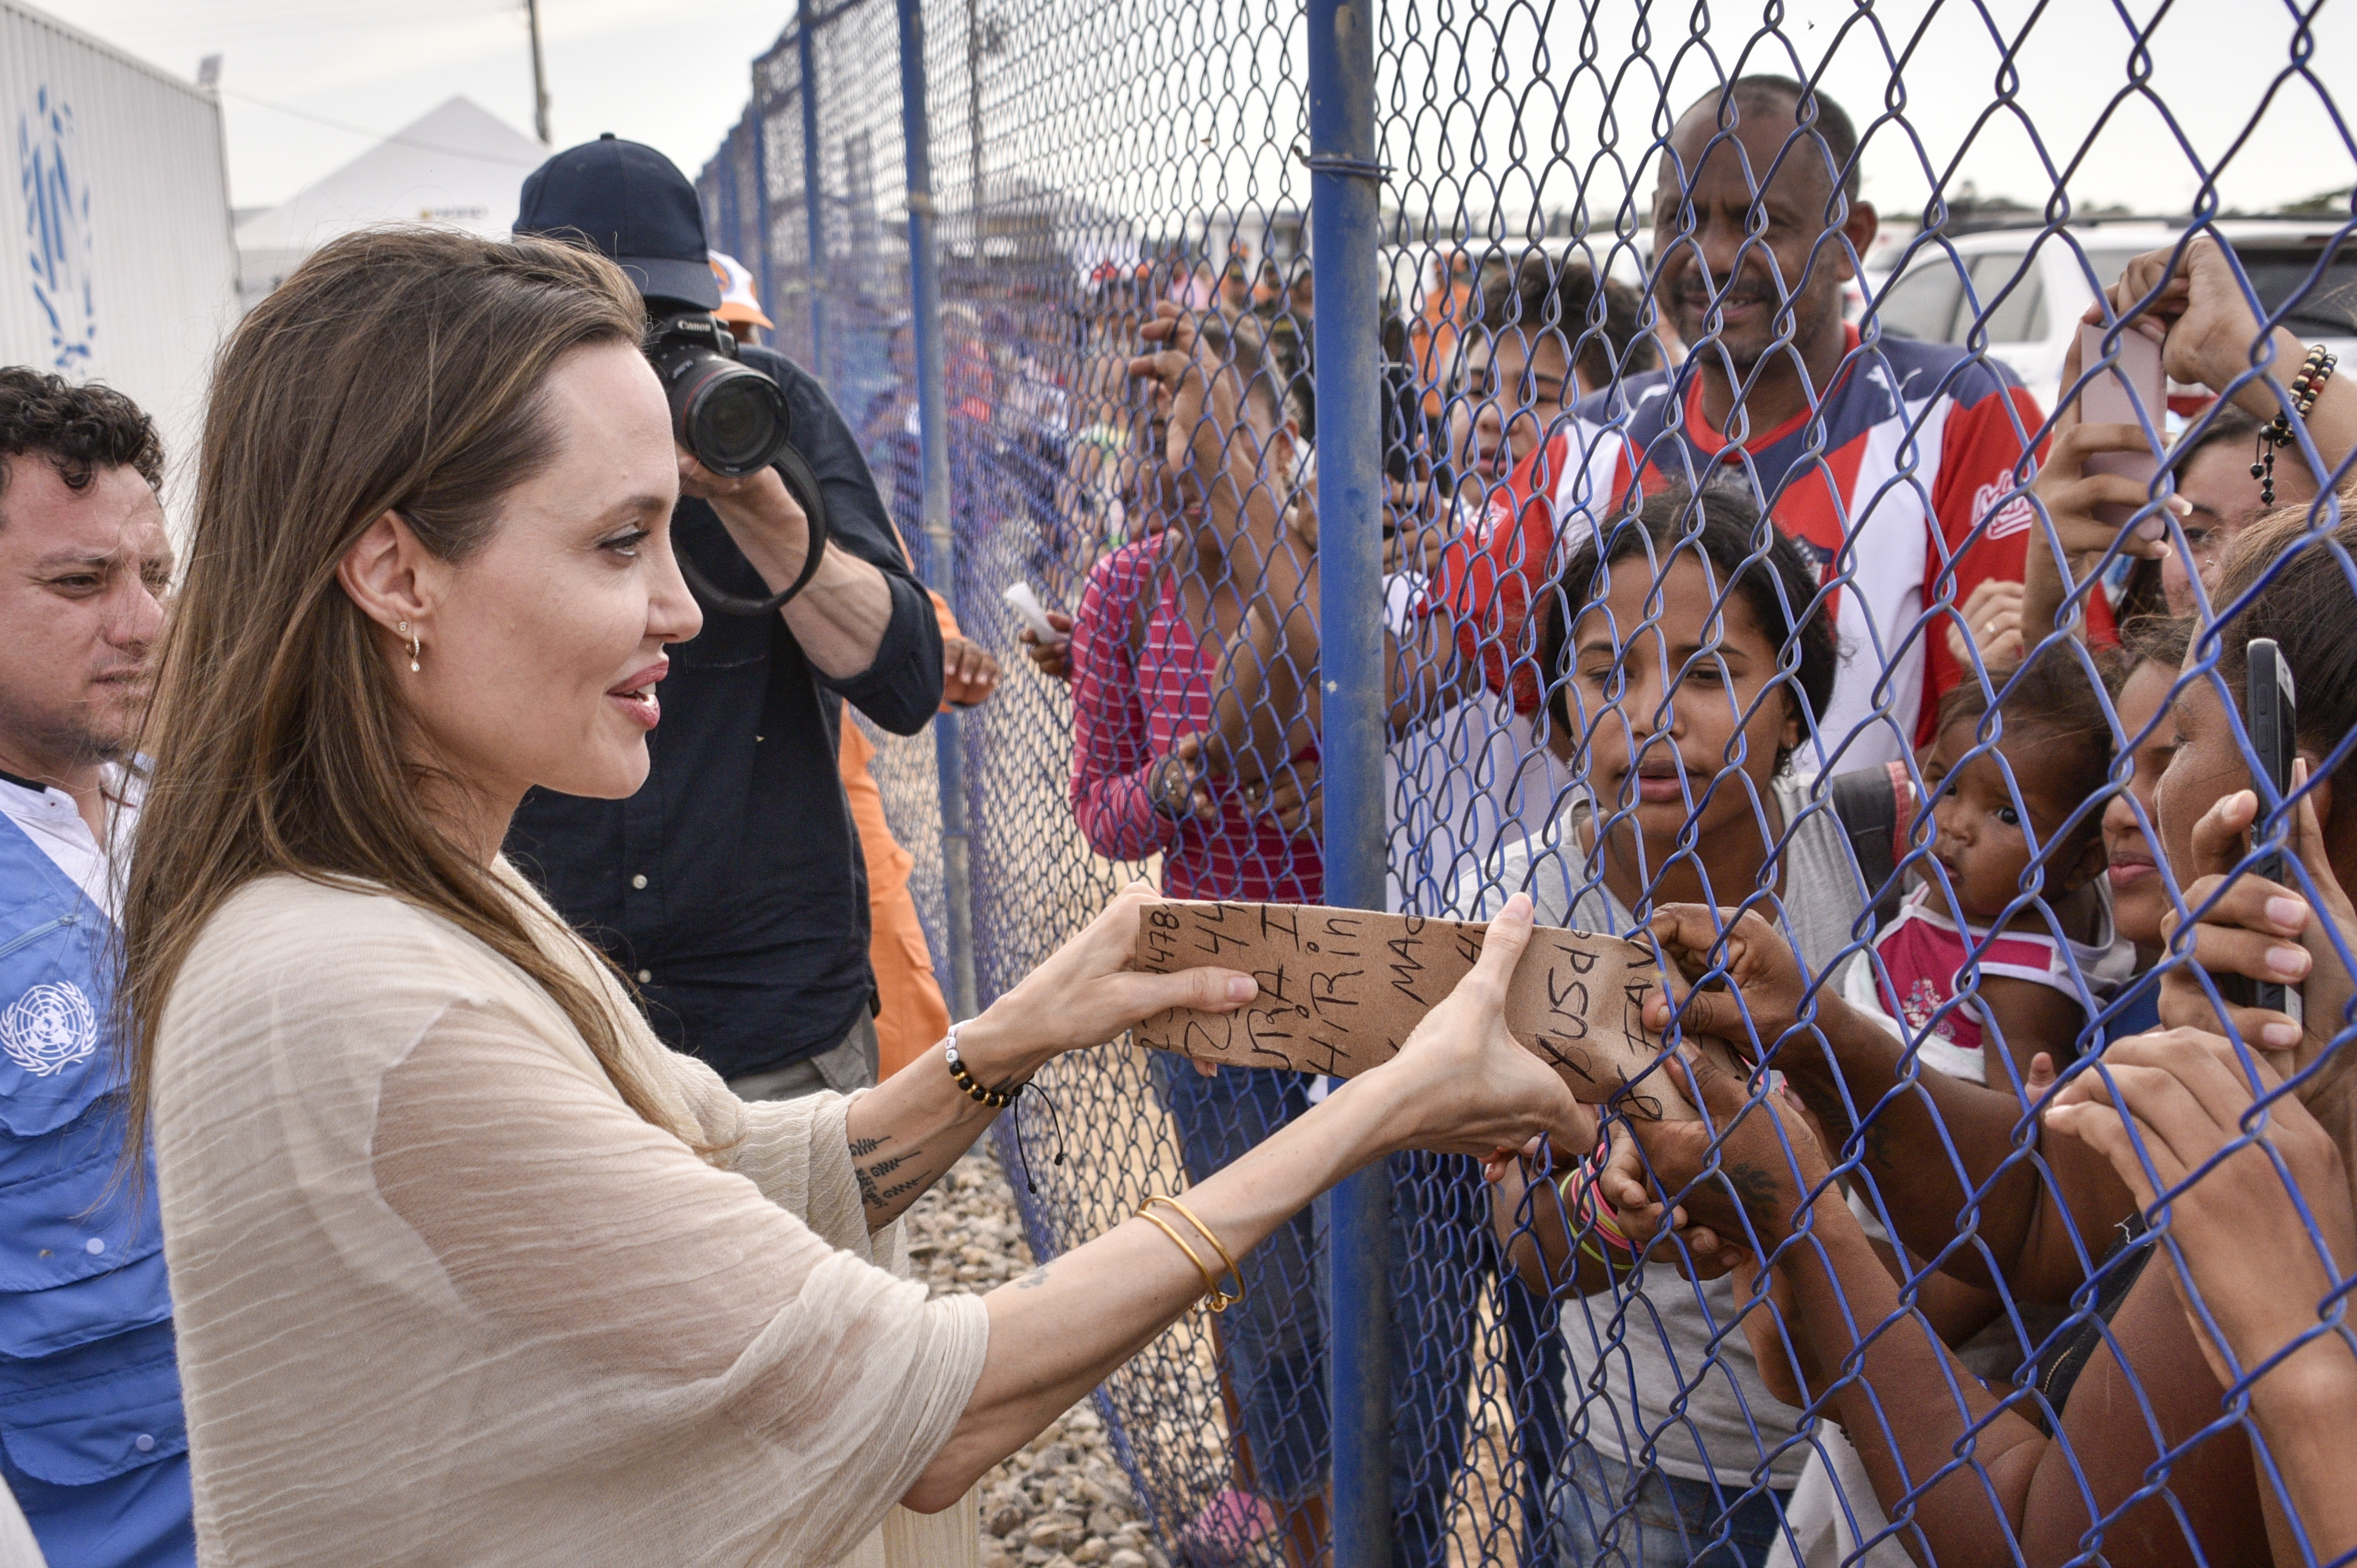 Доброй воли 4. Анджелина Джоли с беженцами. Анджелина Джоли в Камбодже с беженцами. Джоли посол доброй воли. Анджелина Джоли посол ООН.